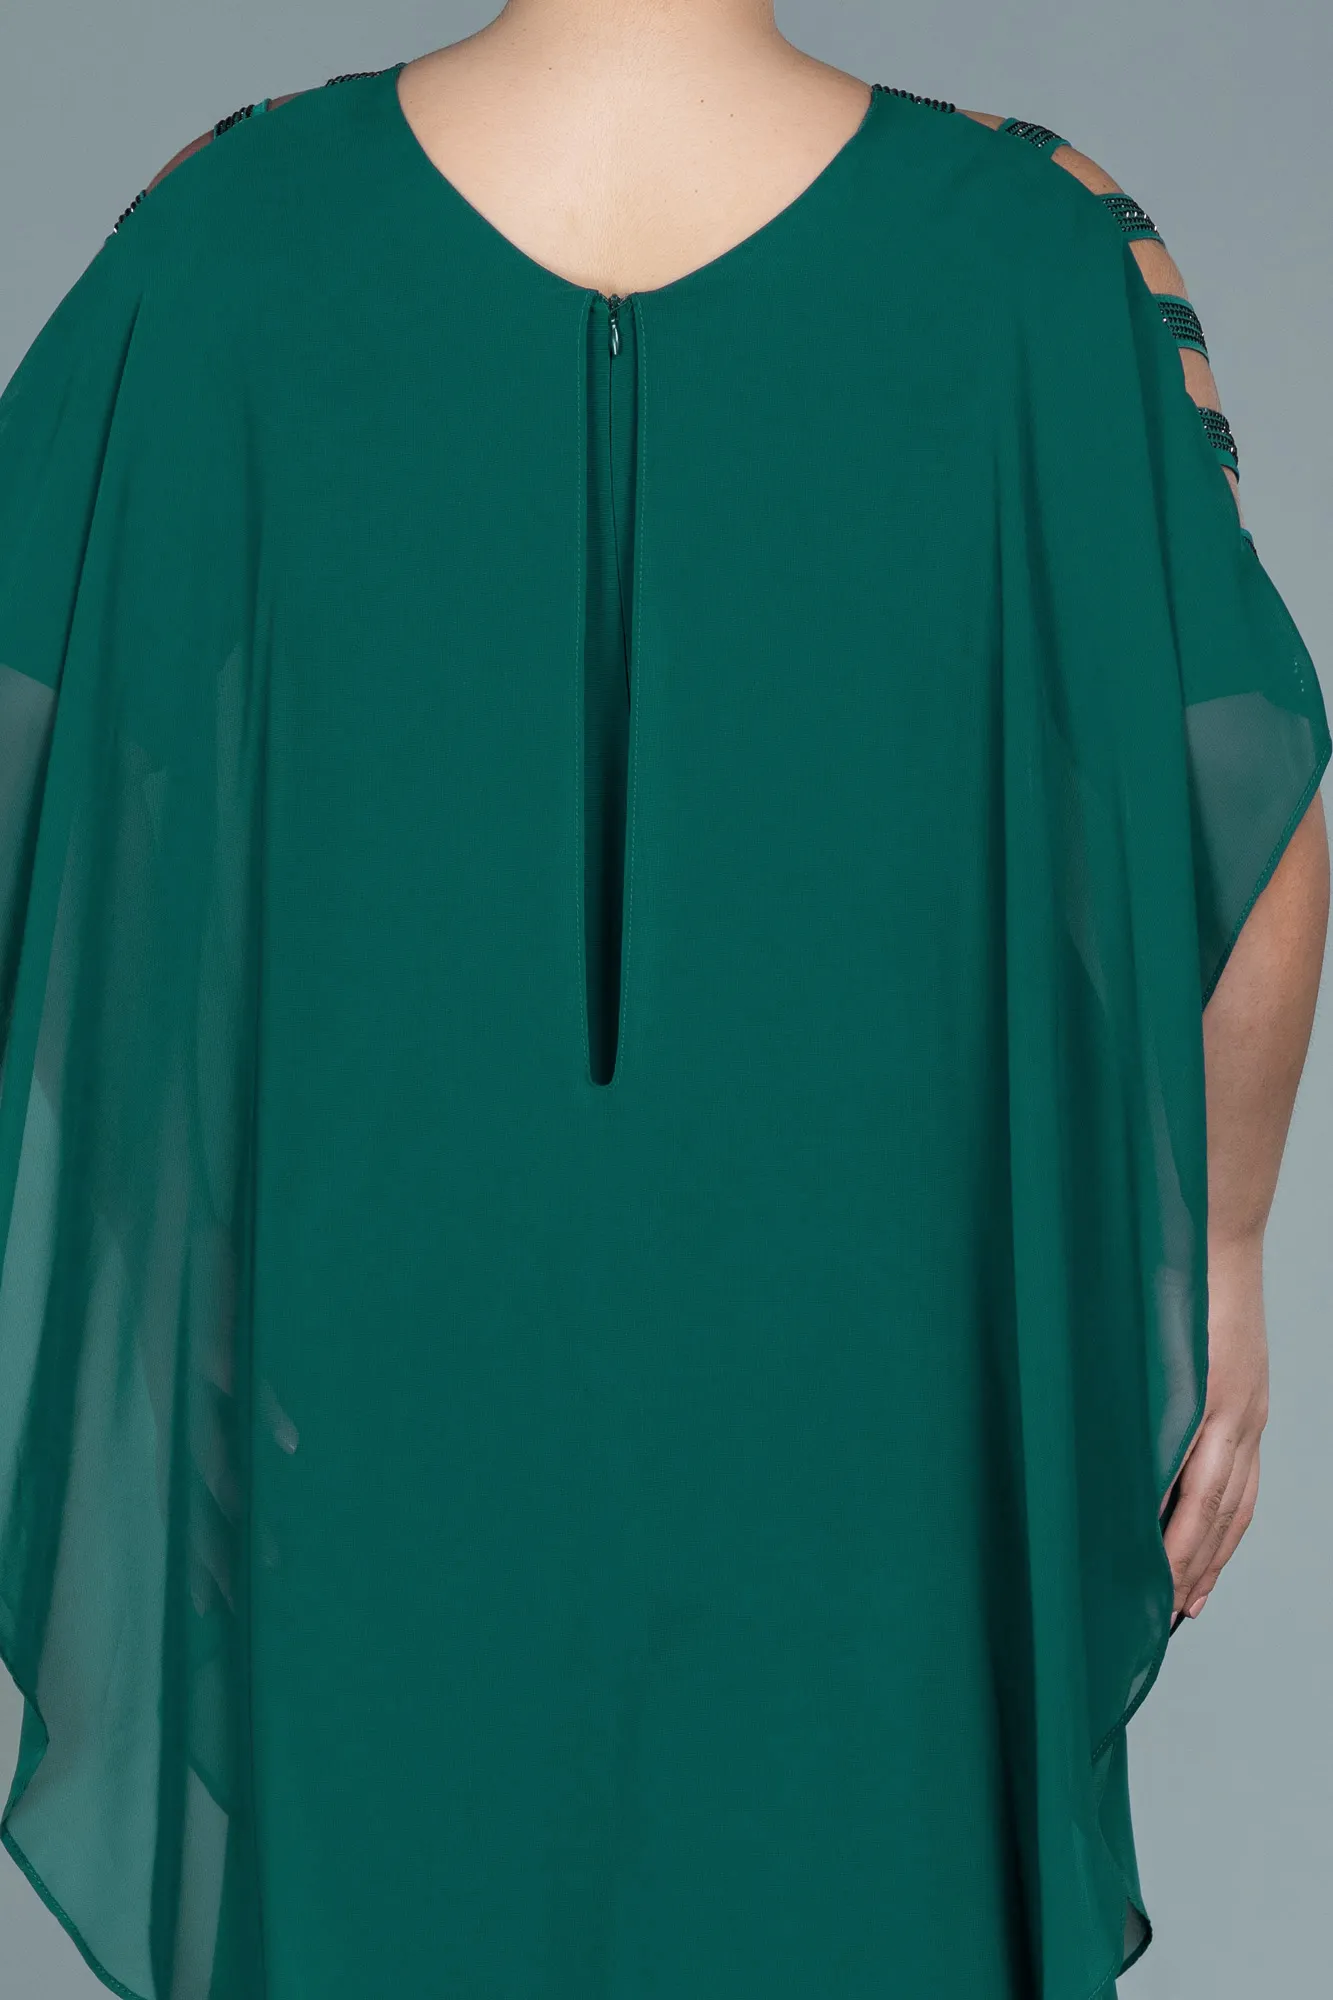 Emerald Green-Chiffon Plus Size Evening Dress ABT080